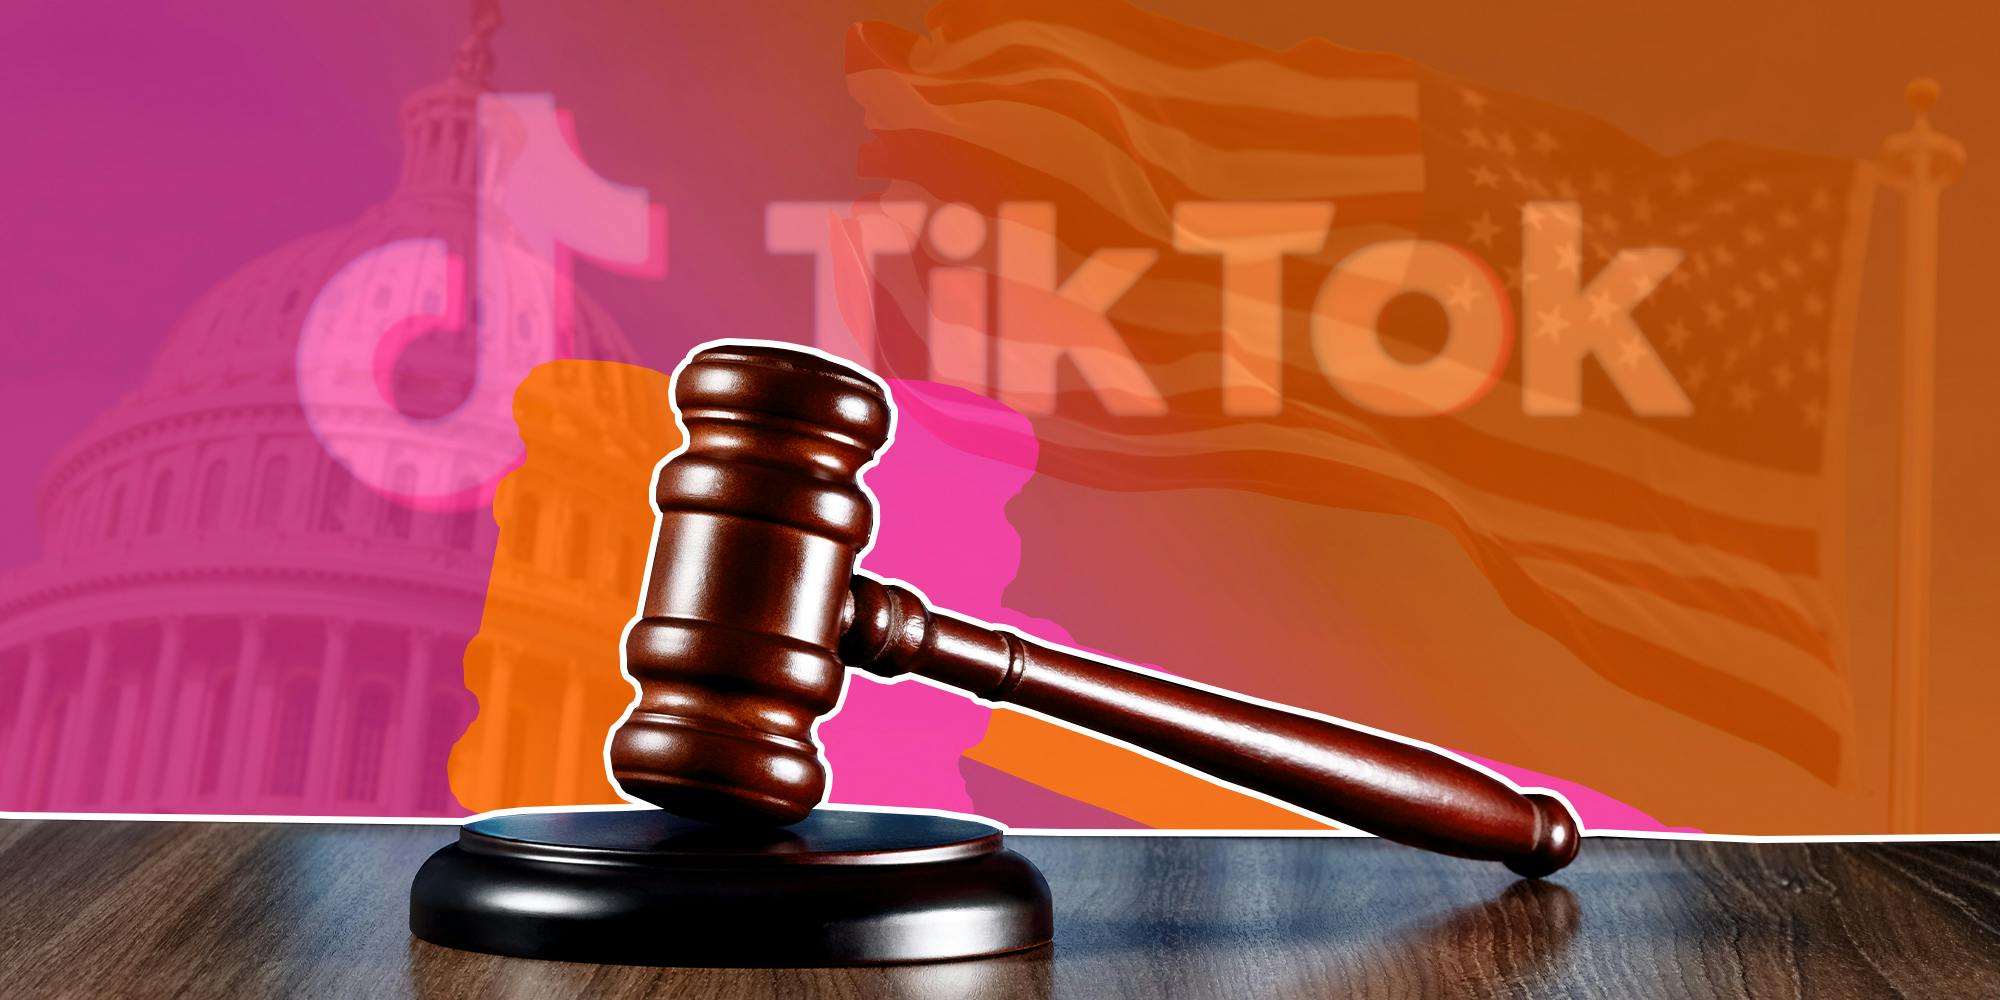 TikTok divest-or-ban legislation gets bundled in fast-tracked foreign aid package, pressuring Senate